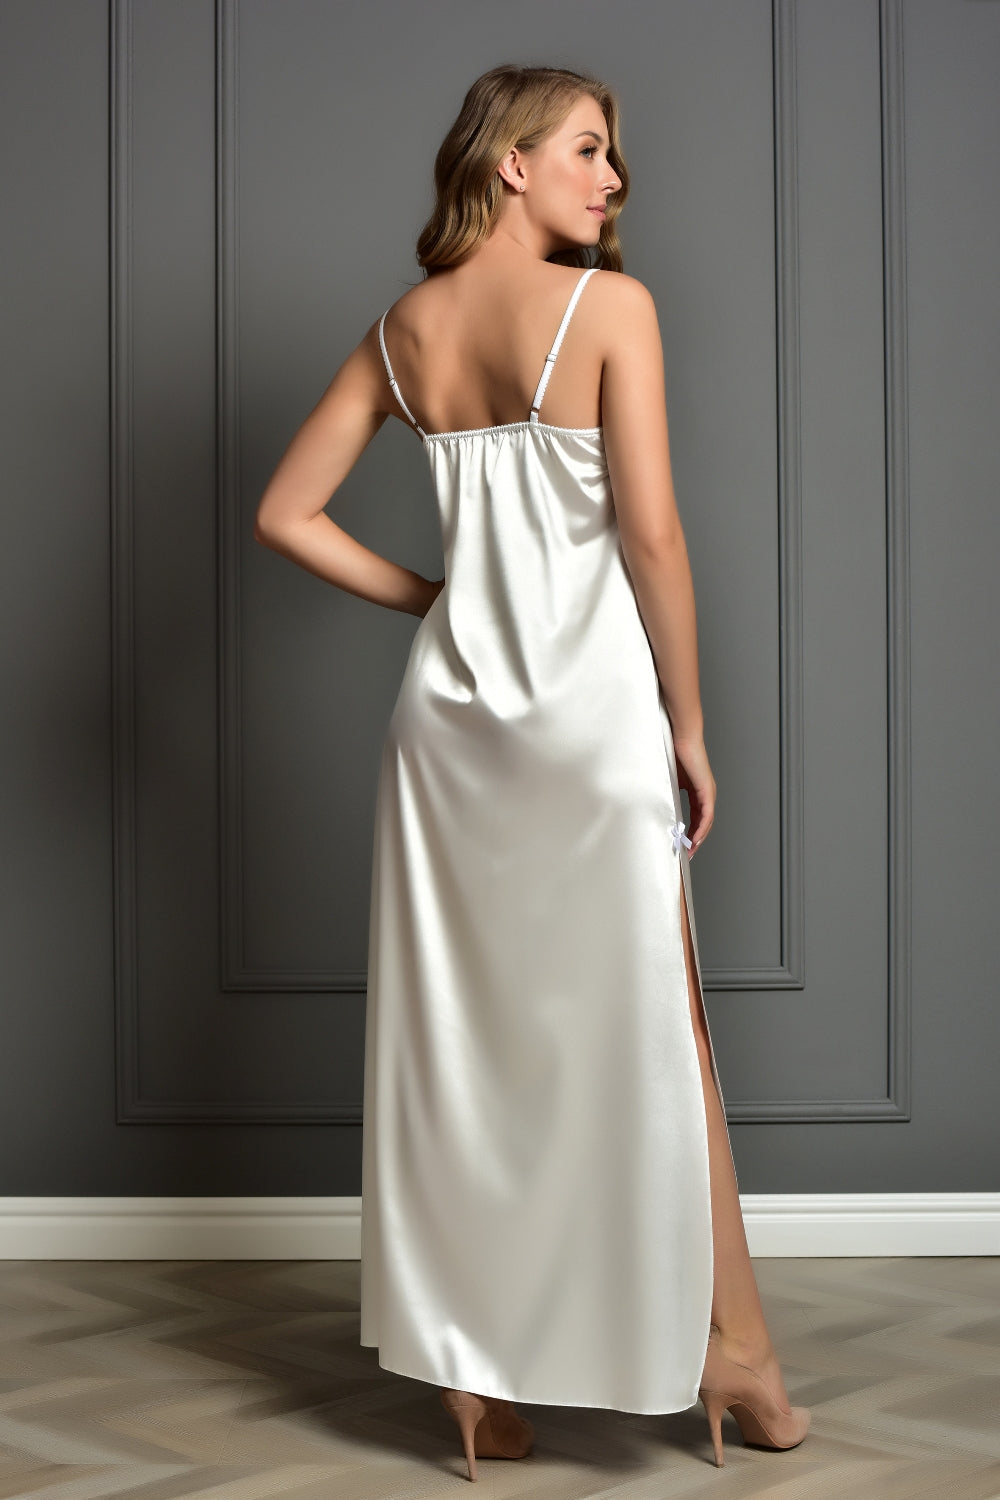 Elegant Plus Size Bridal Nightdress in Ivory Satin - Floor-Length Sleepwear